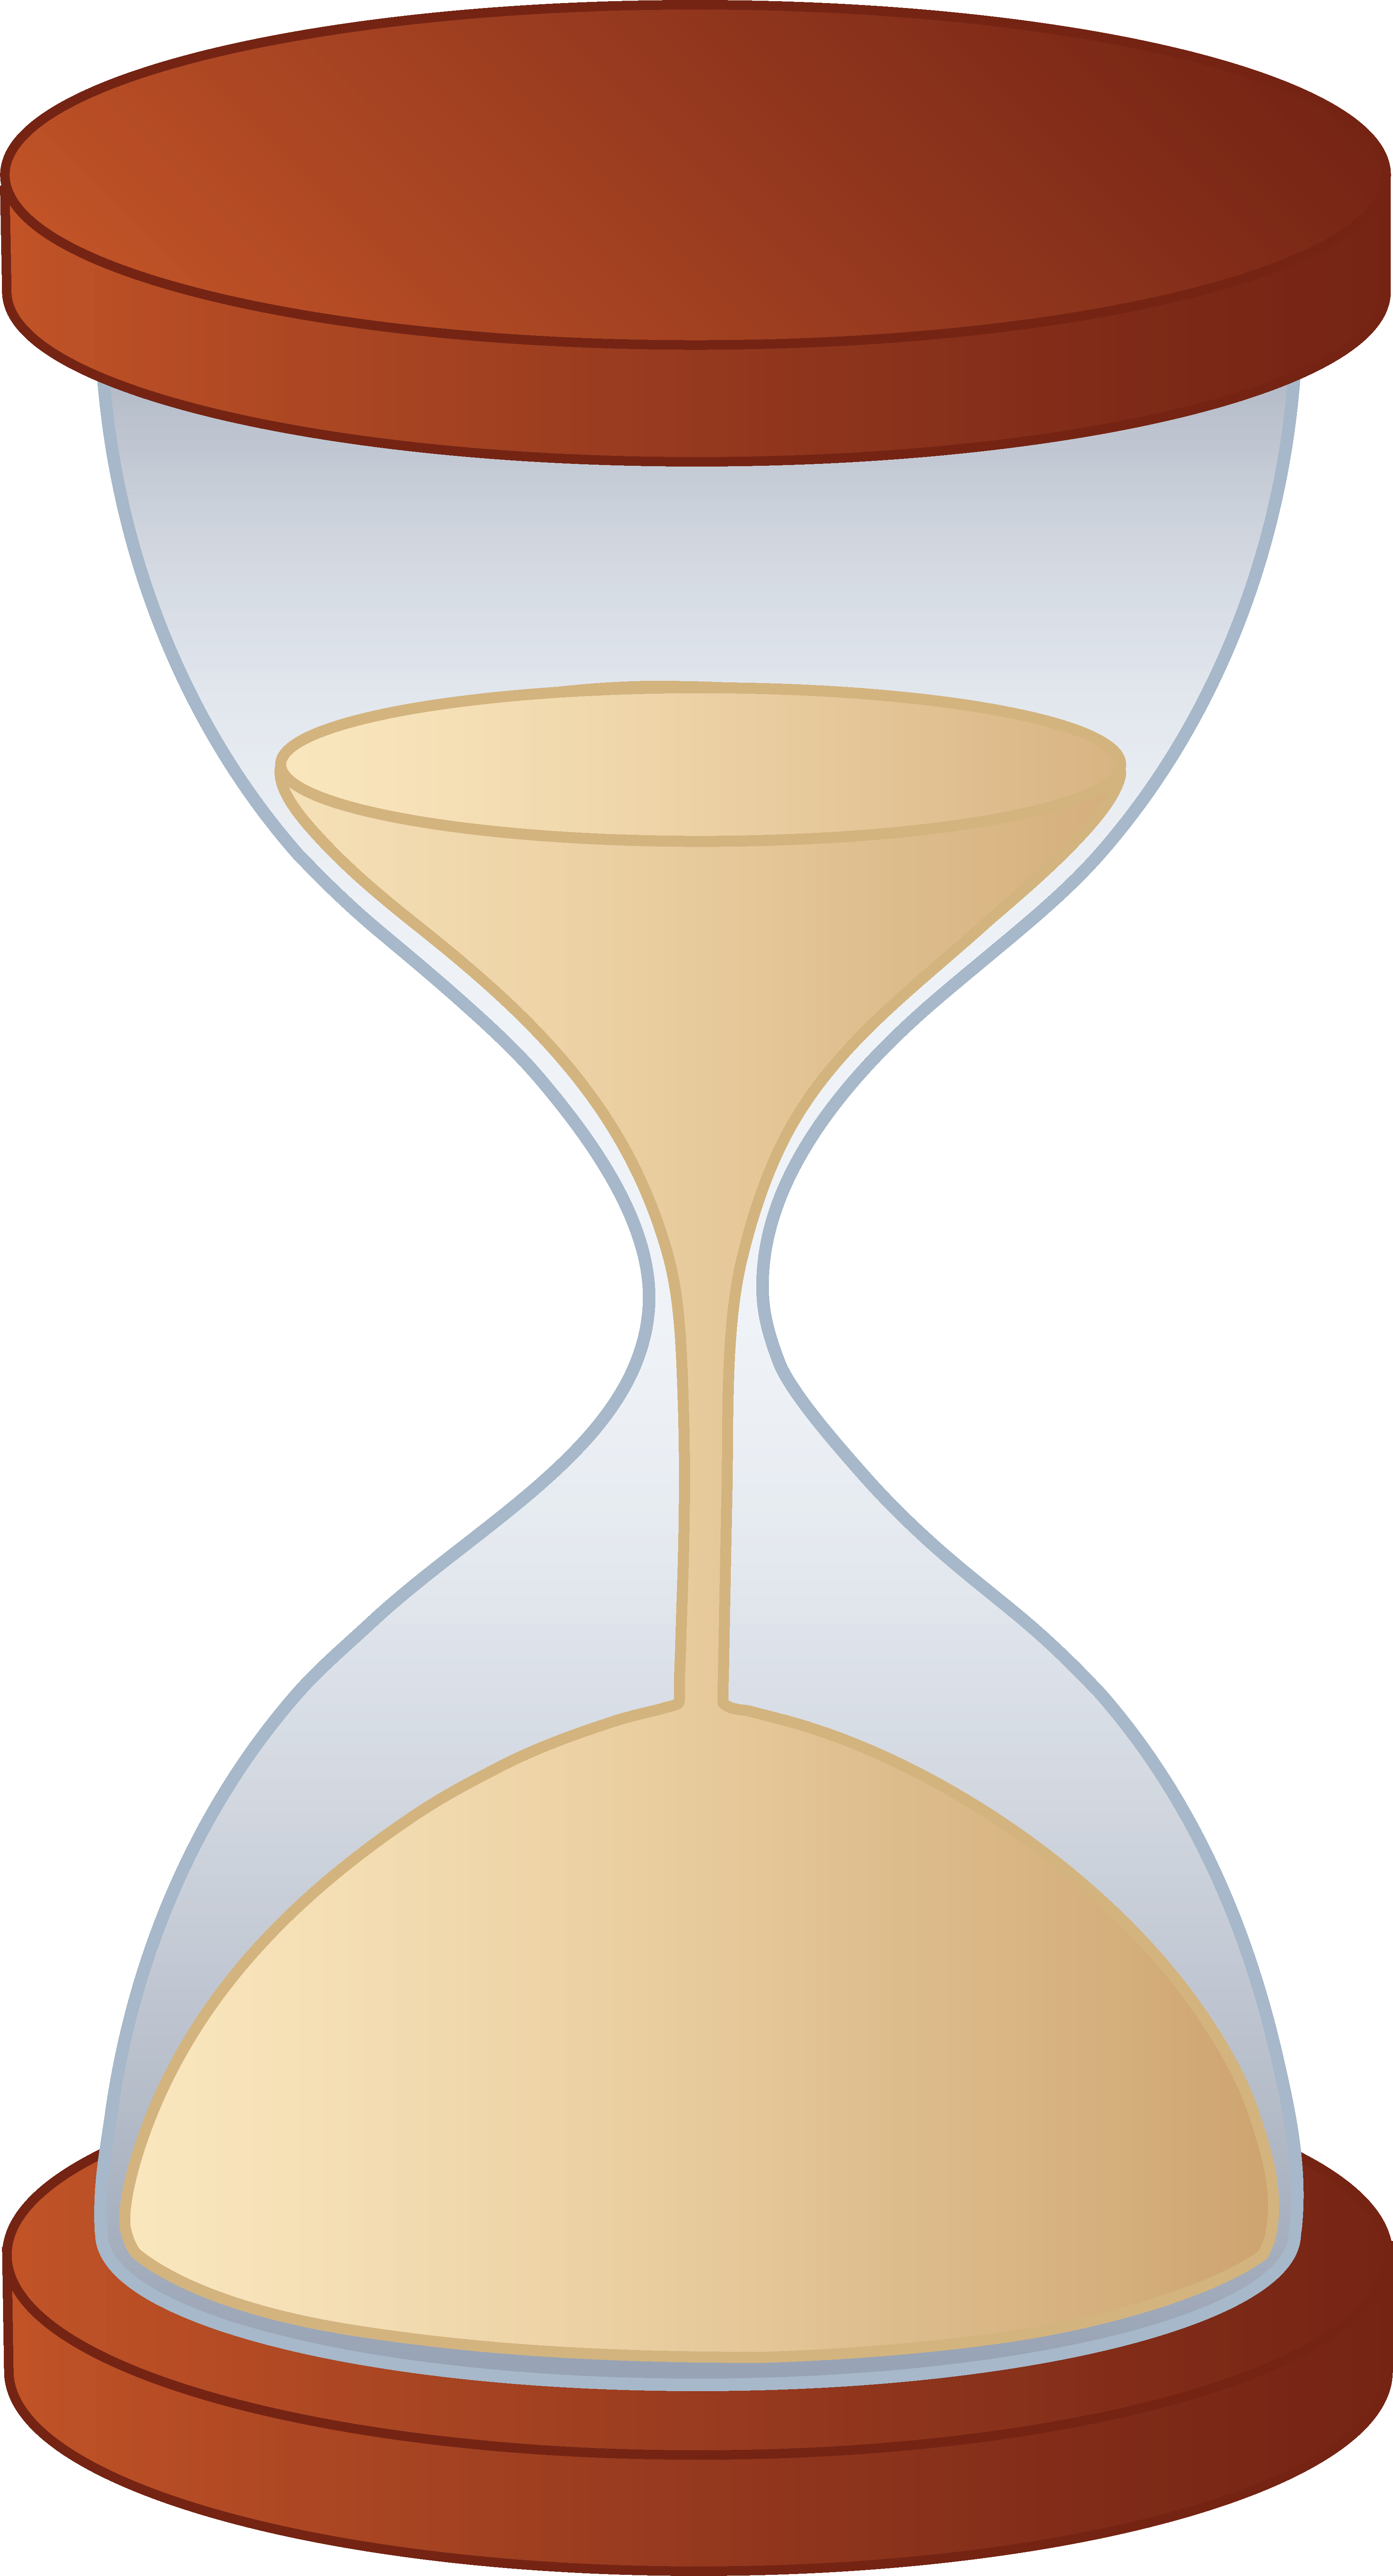 Clipart hourglass timer - ClipartFox